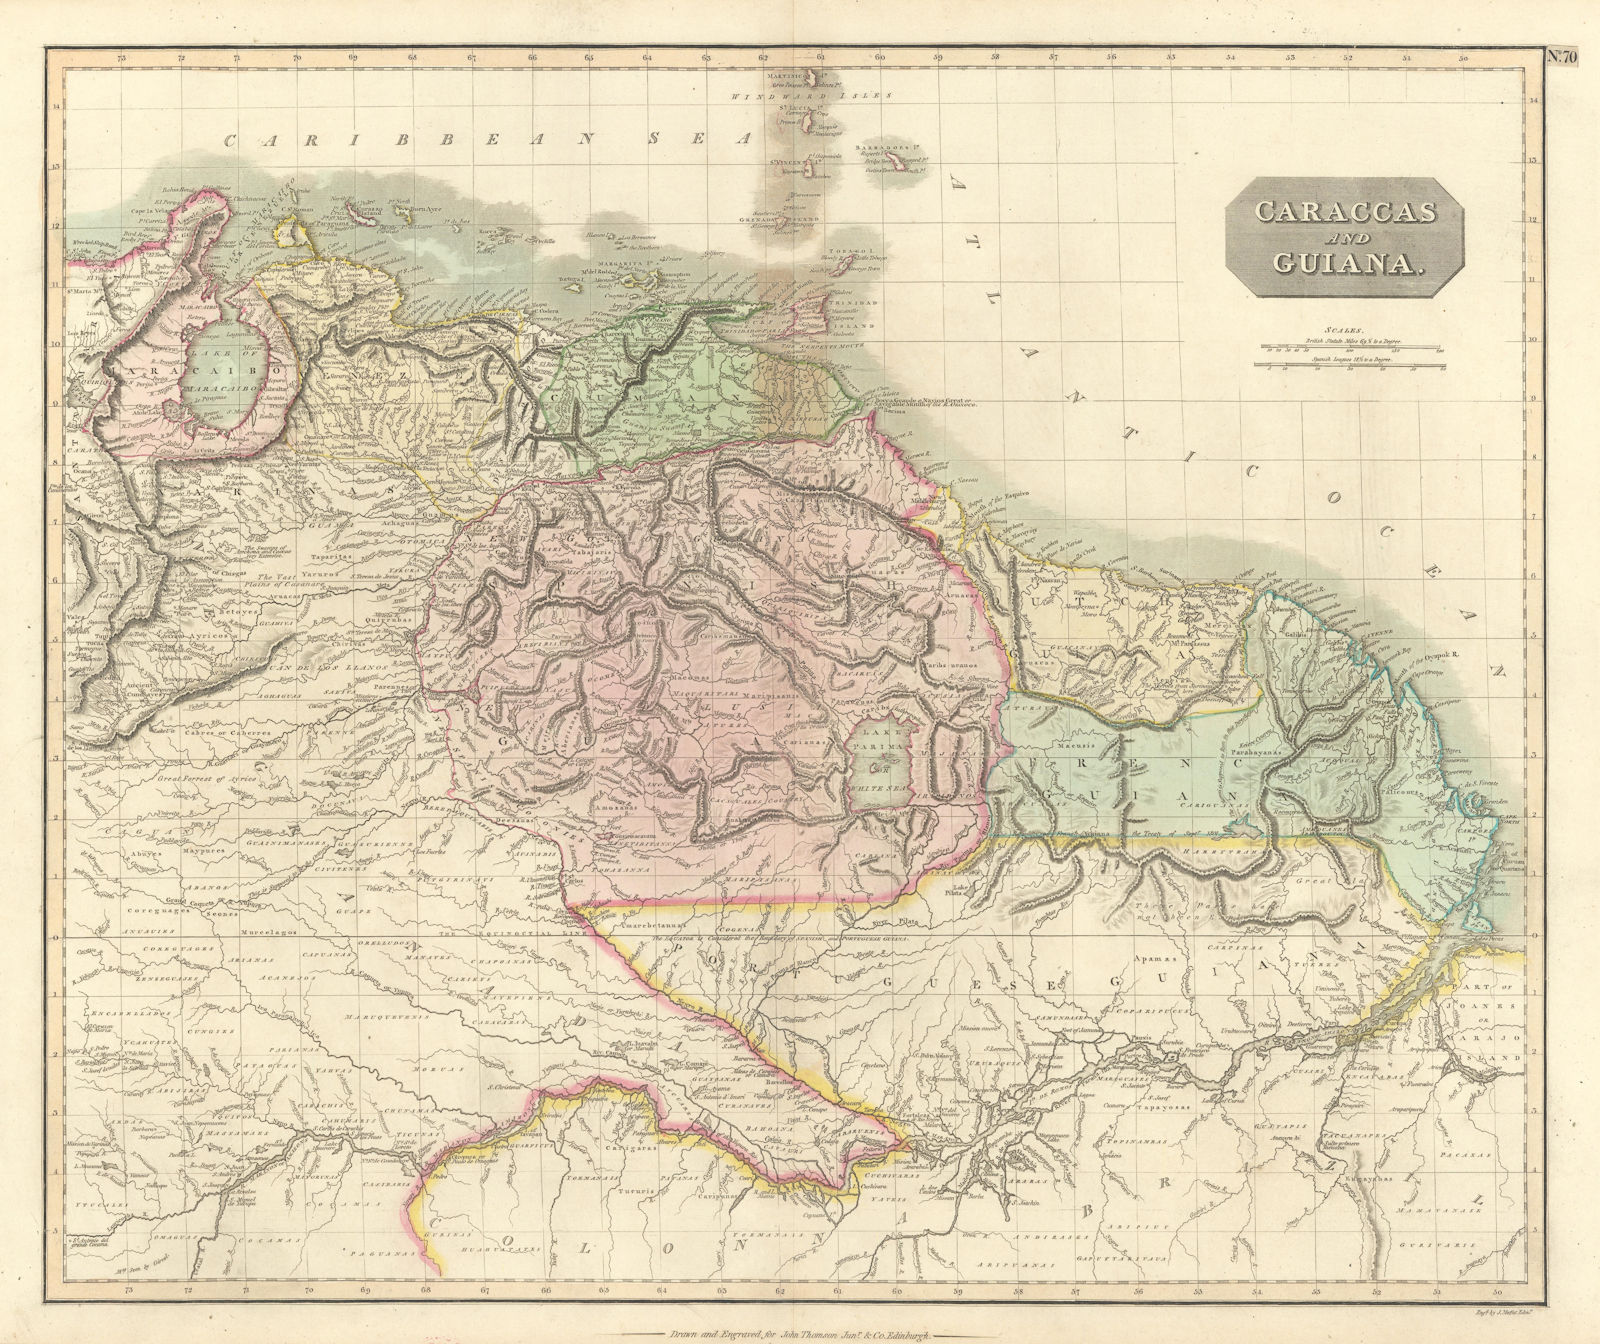 Associate Product "Caraccas and Guiana" by John Thomson. Venezuela Guyana Amazonas 1817 old map